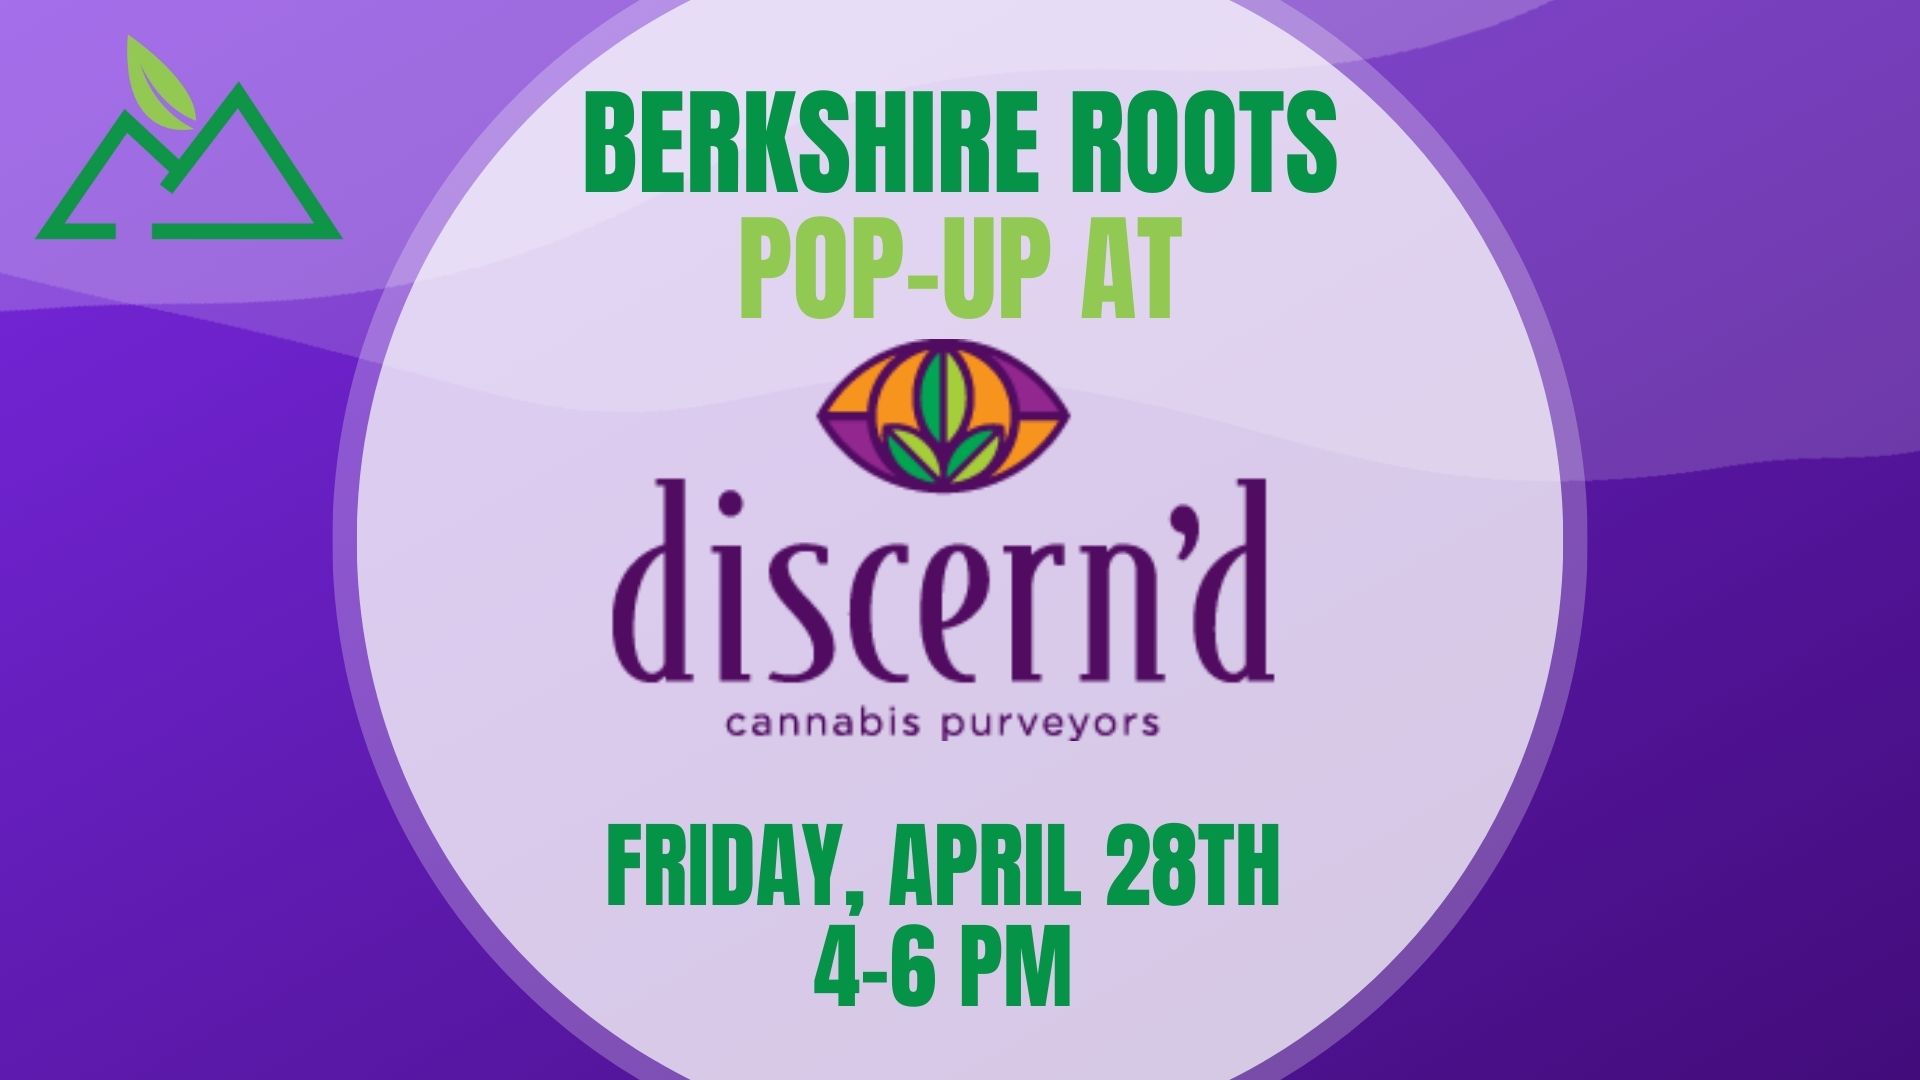 Berkshire Roots pop up at Discern'd Cannabis